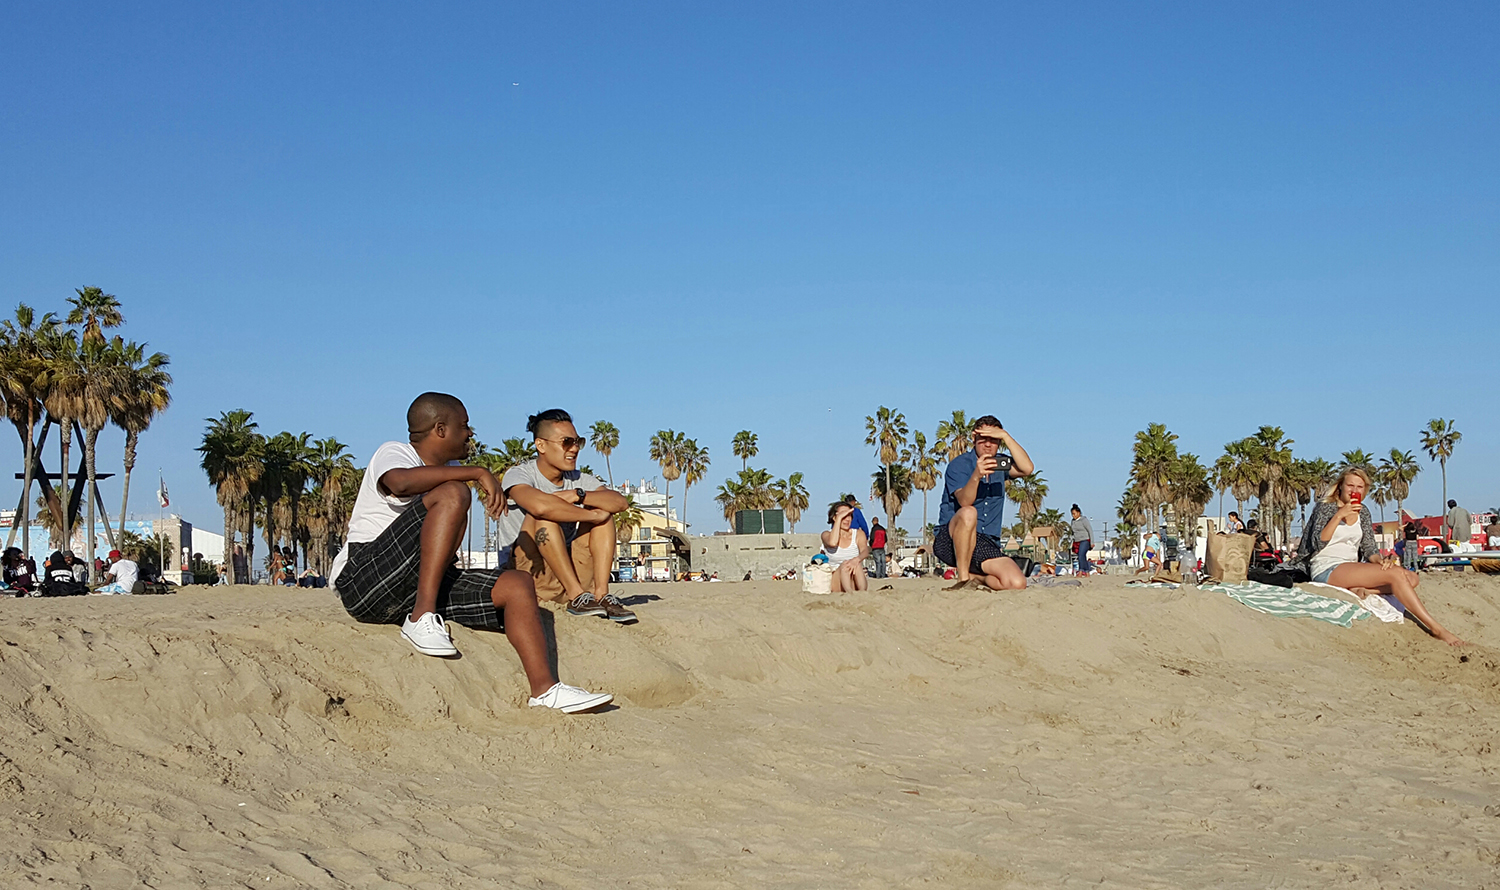 Jeff & Khai - Venice Beach (Los Angeles, CA)